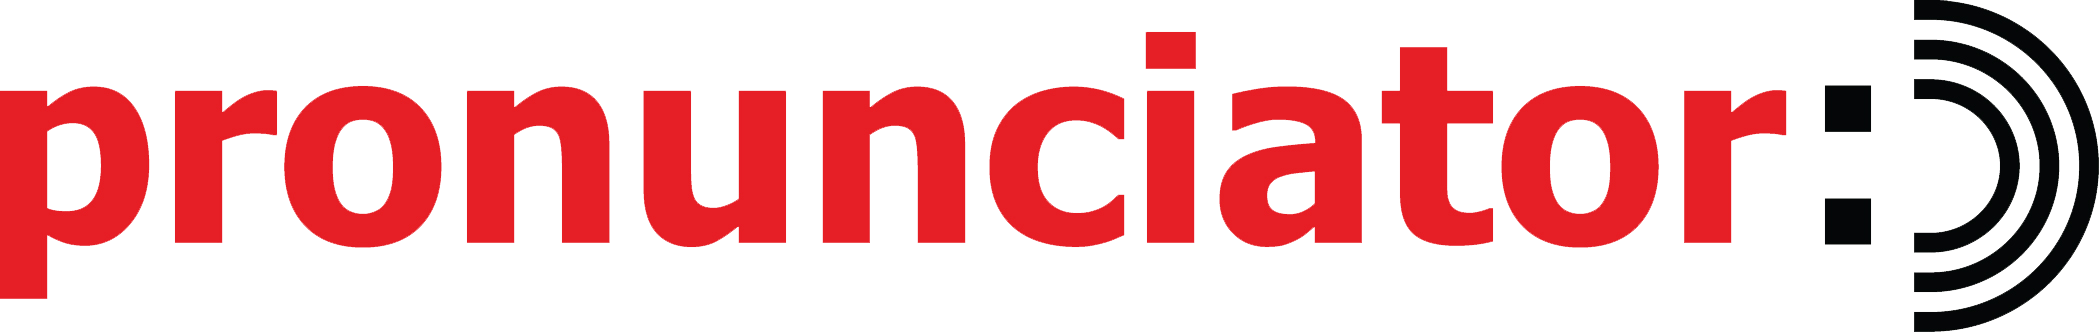 Pronunciator logo